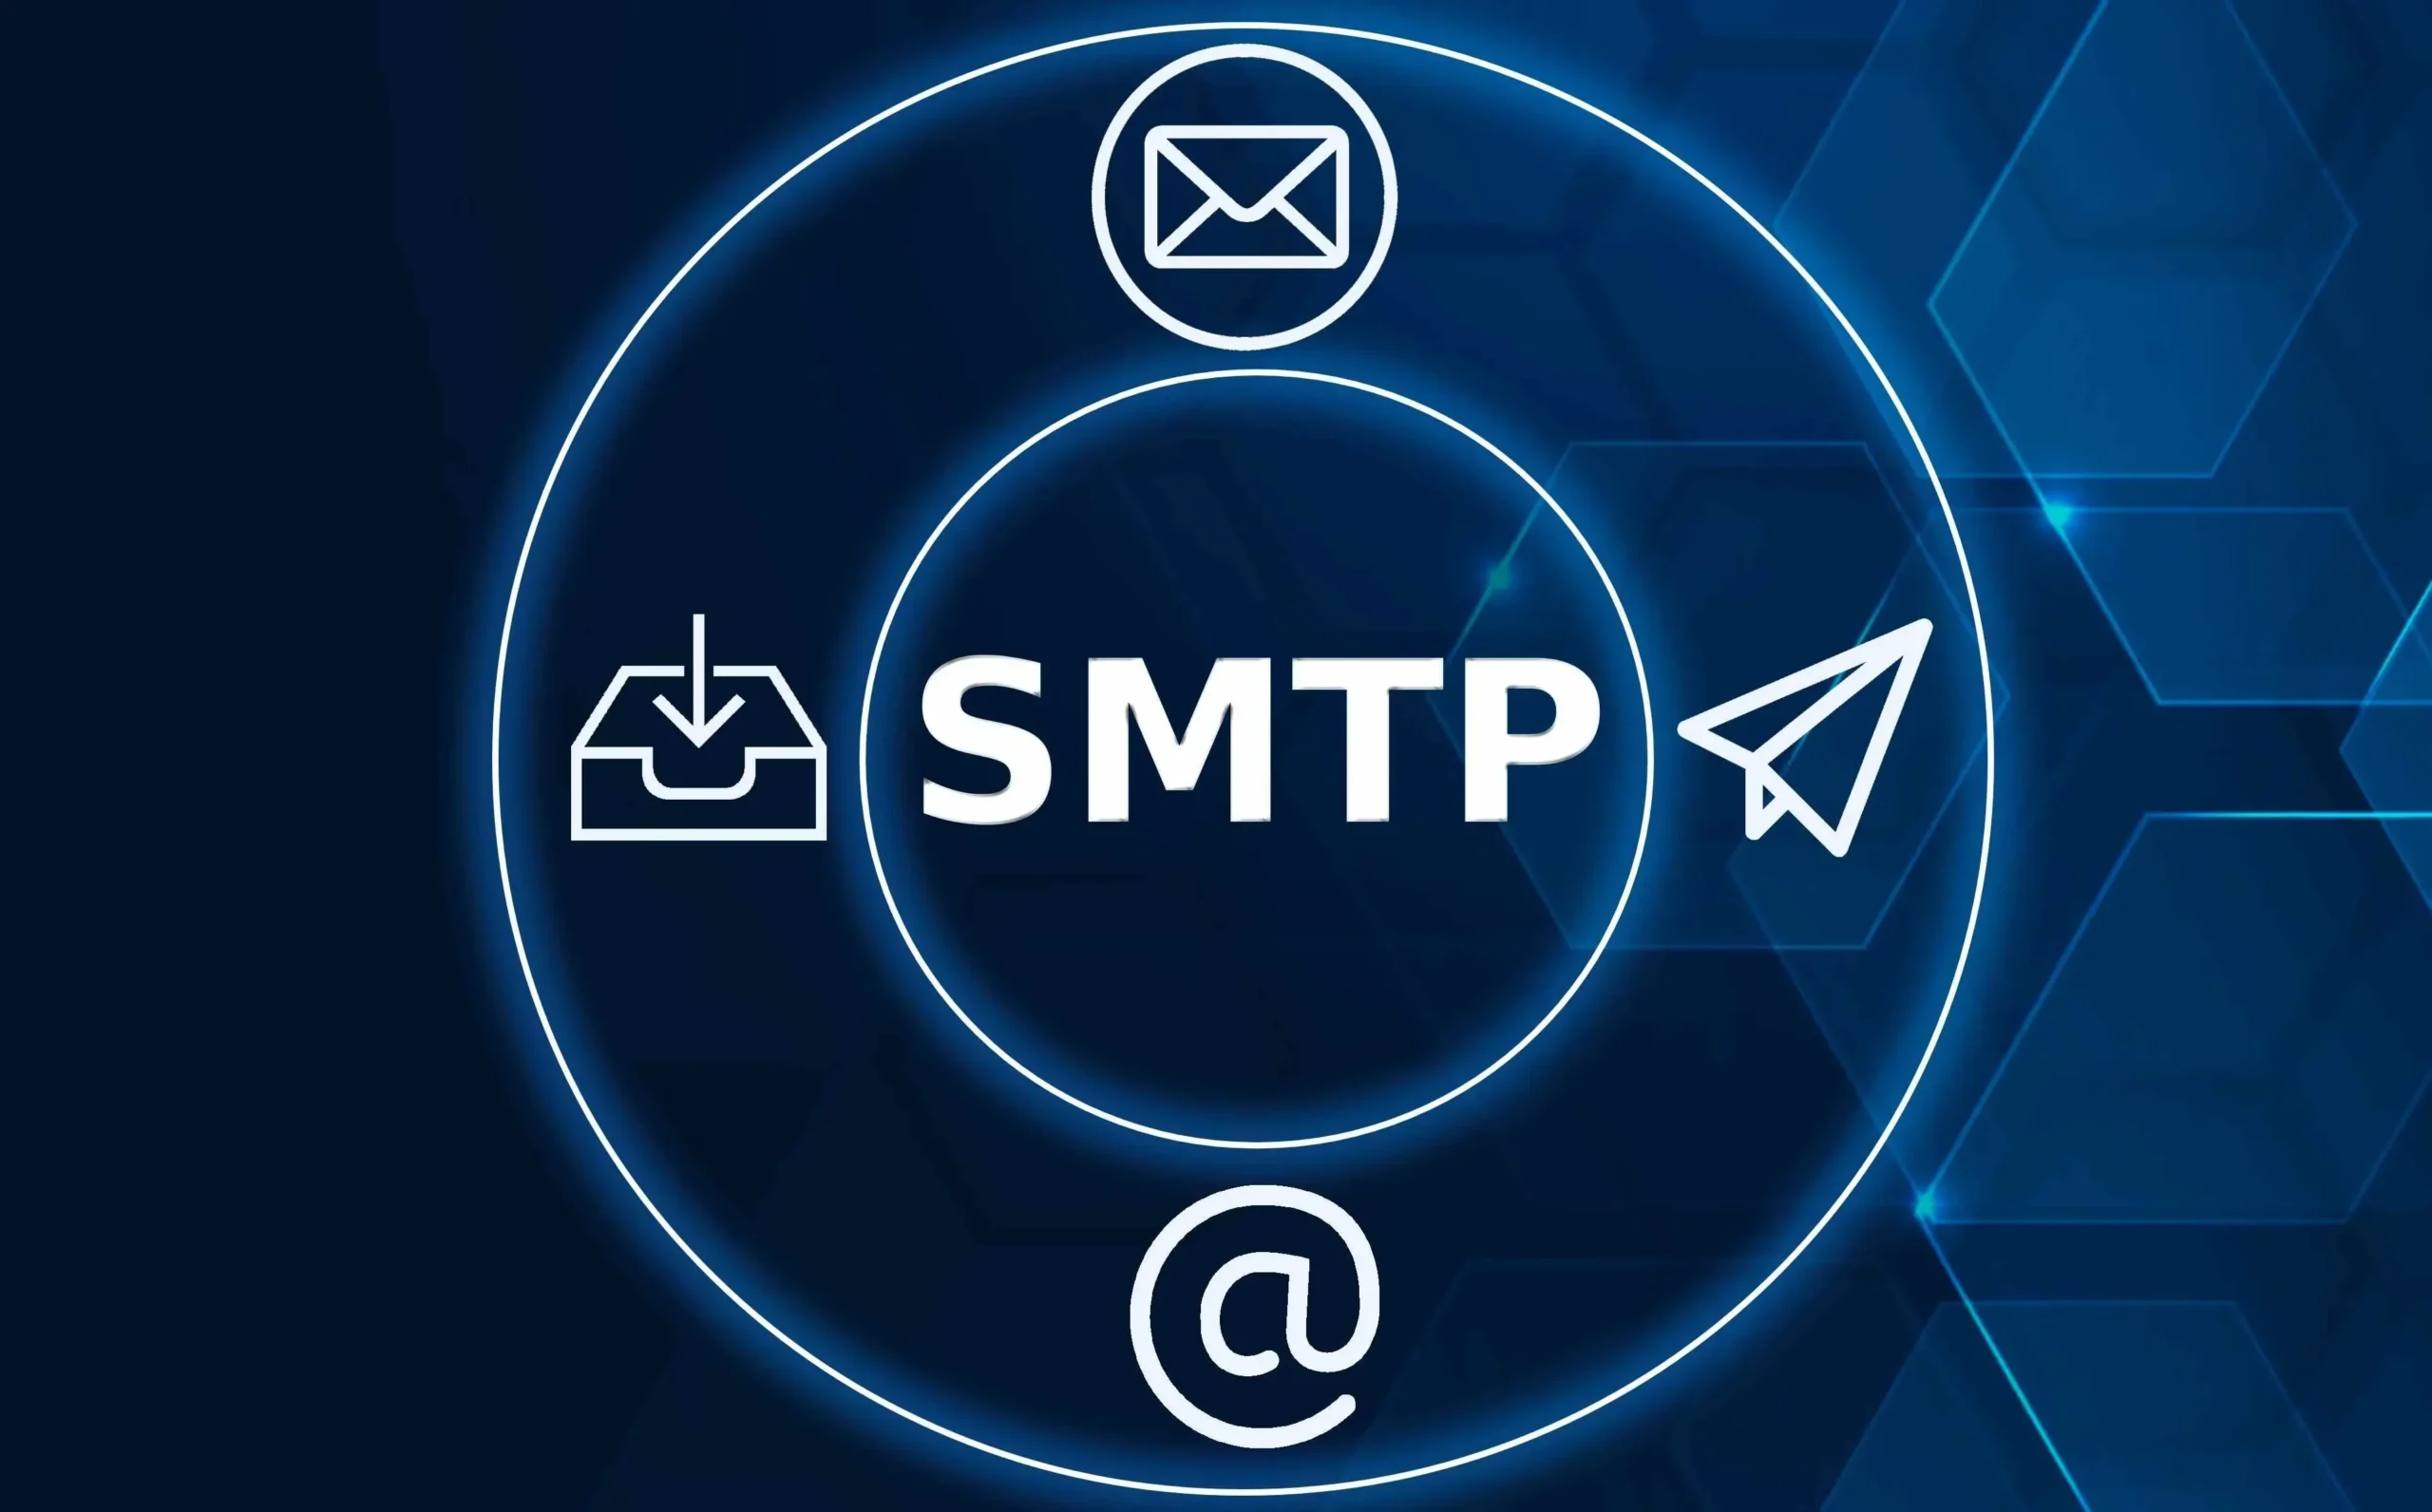 Is SMTP a Sender?